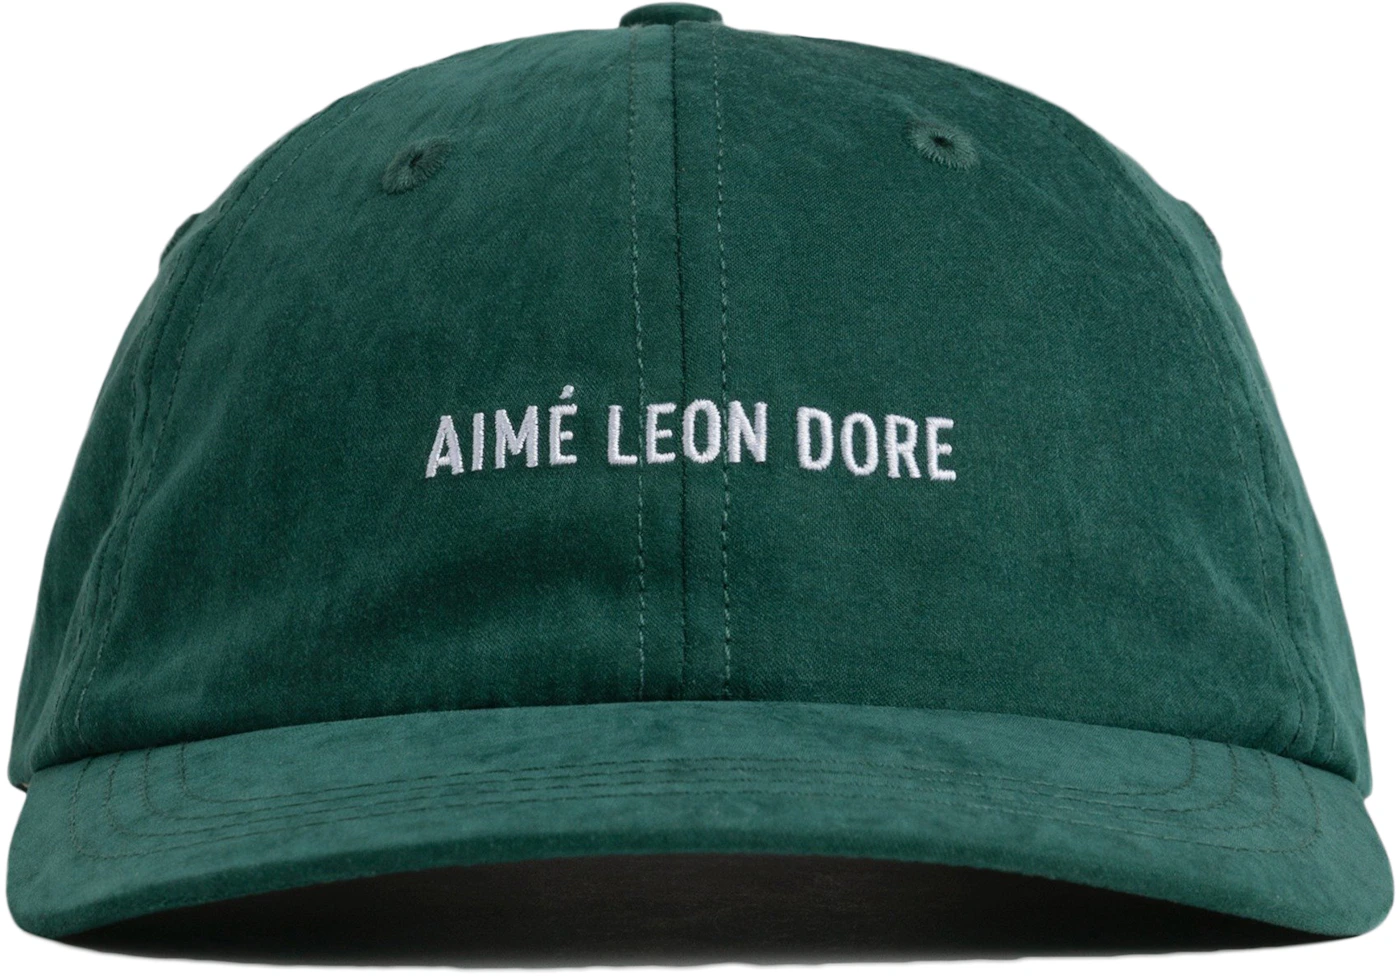 Aime Leon Dore x New Era Brushed Nylon Yankees (2021) Hat Olive